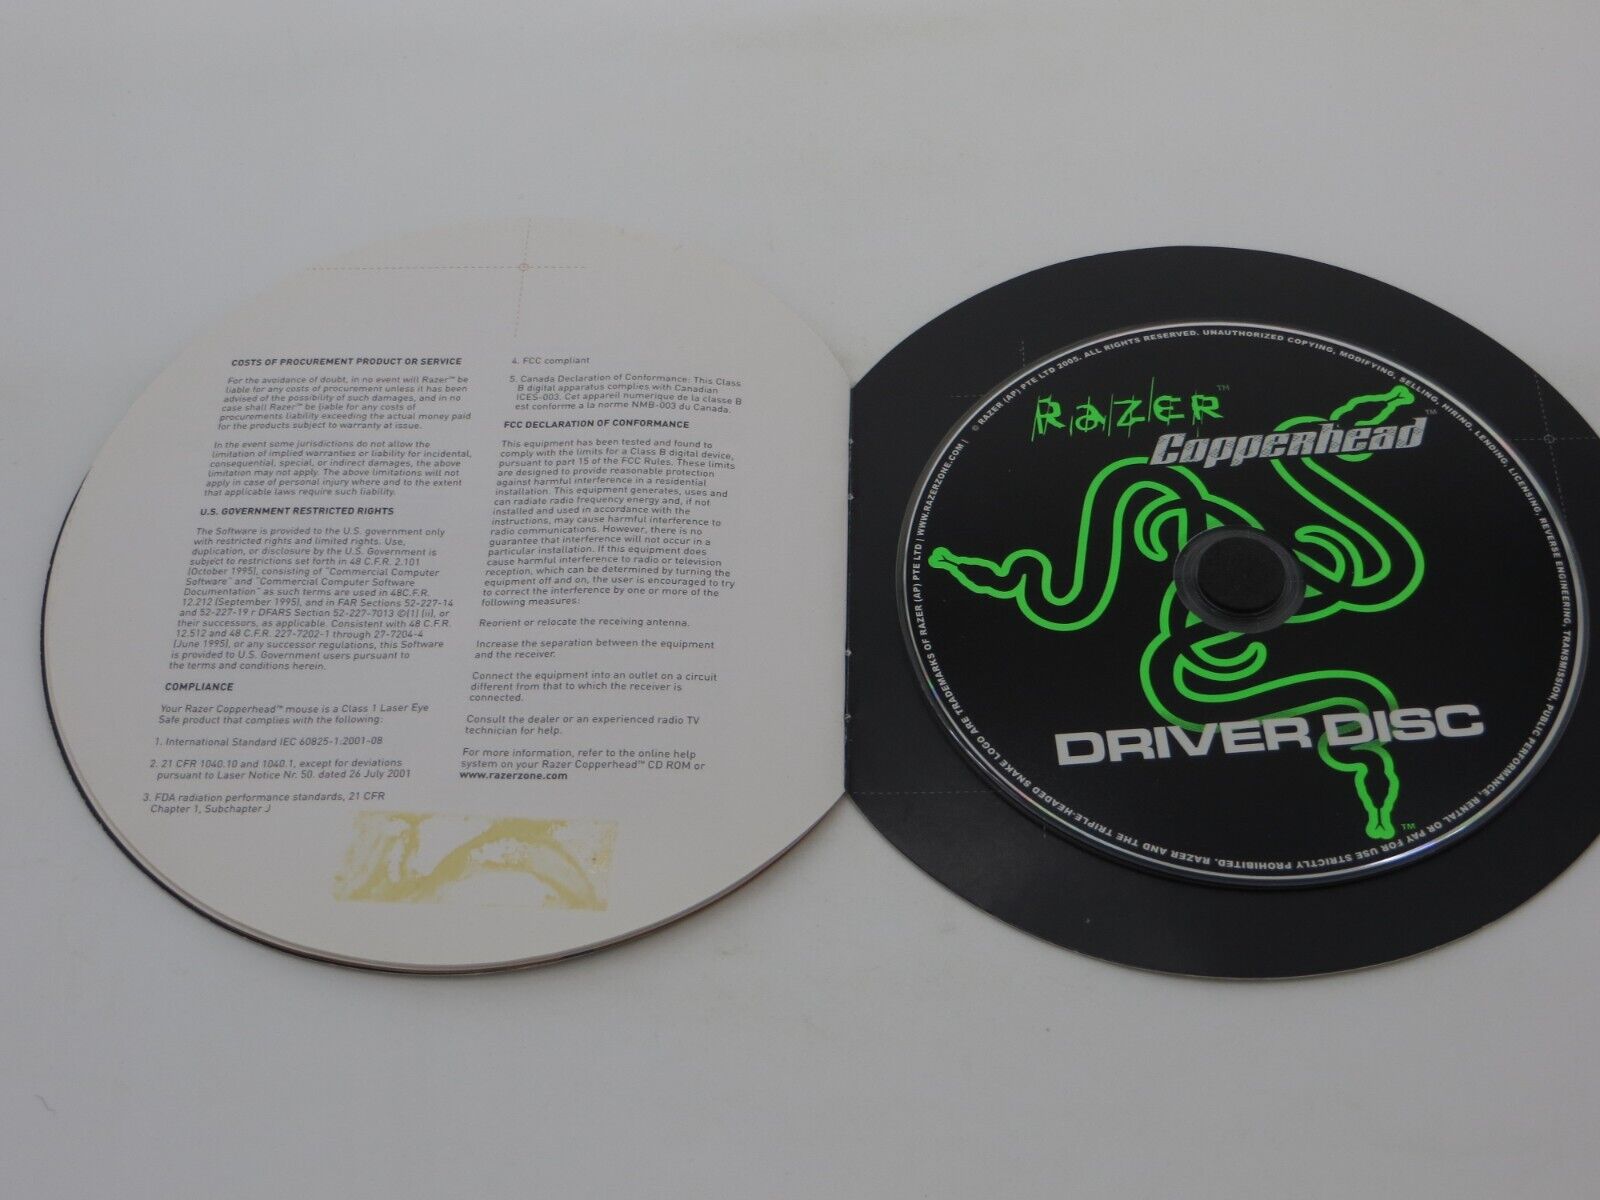 RAZER Copperhead Computer Mouse Driver Disc CD-ROM 2005 vtg pc com disk